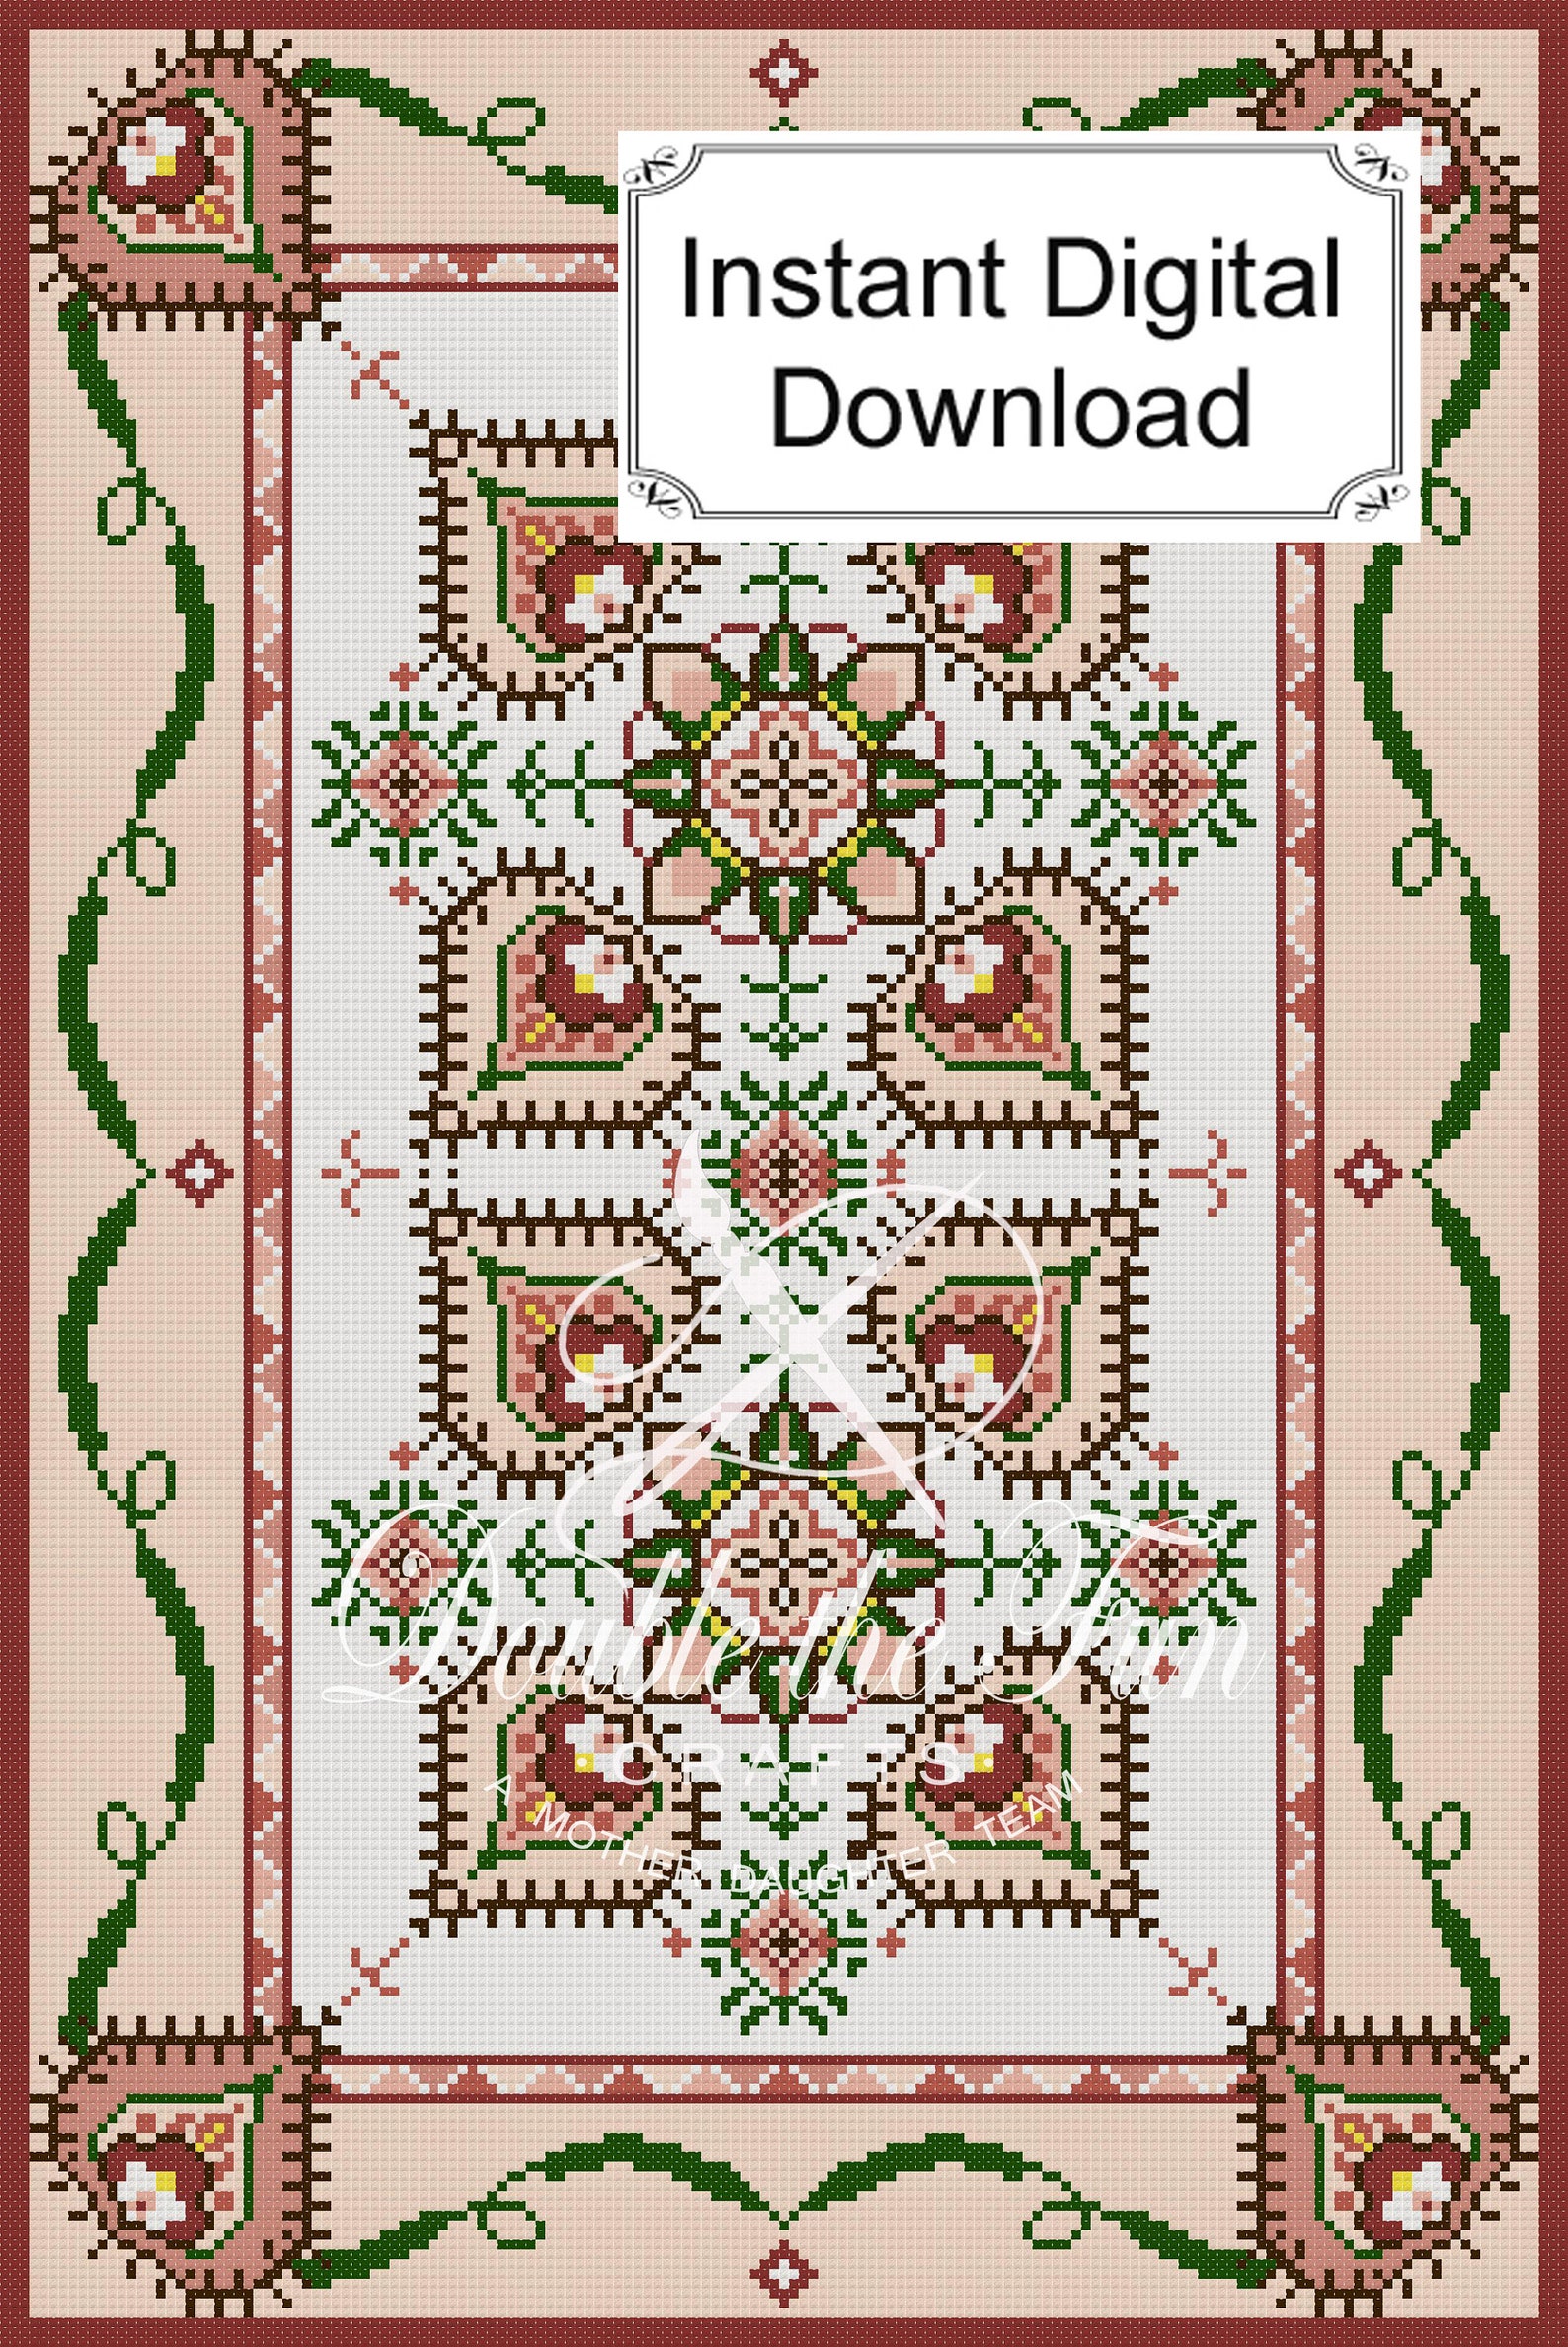 dollhouse-rug-pattern-instant-digital-download-petitpoint-etsy